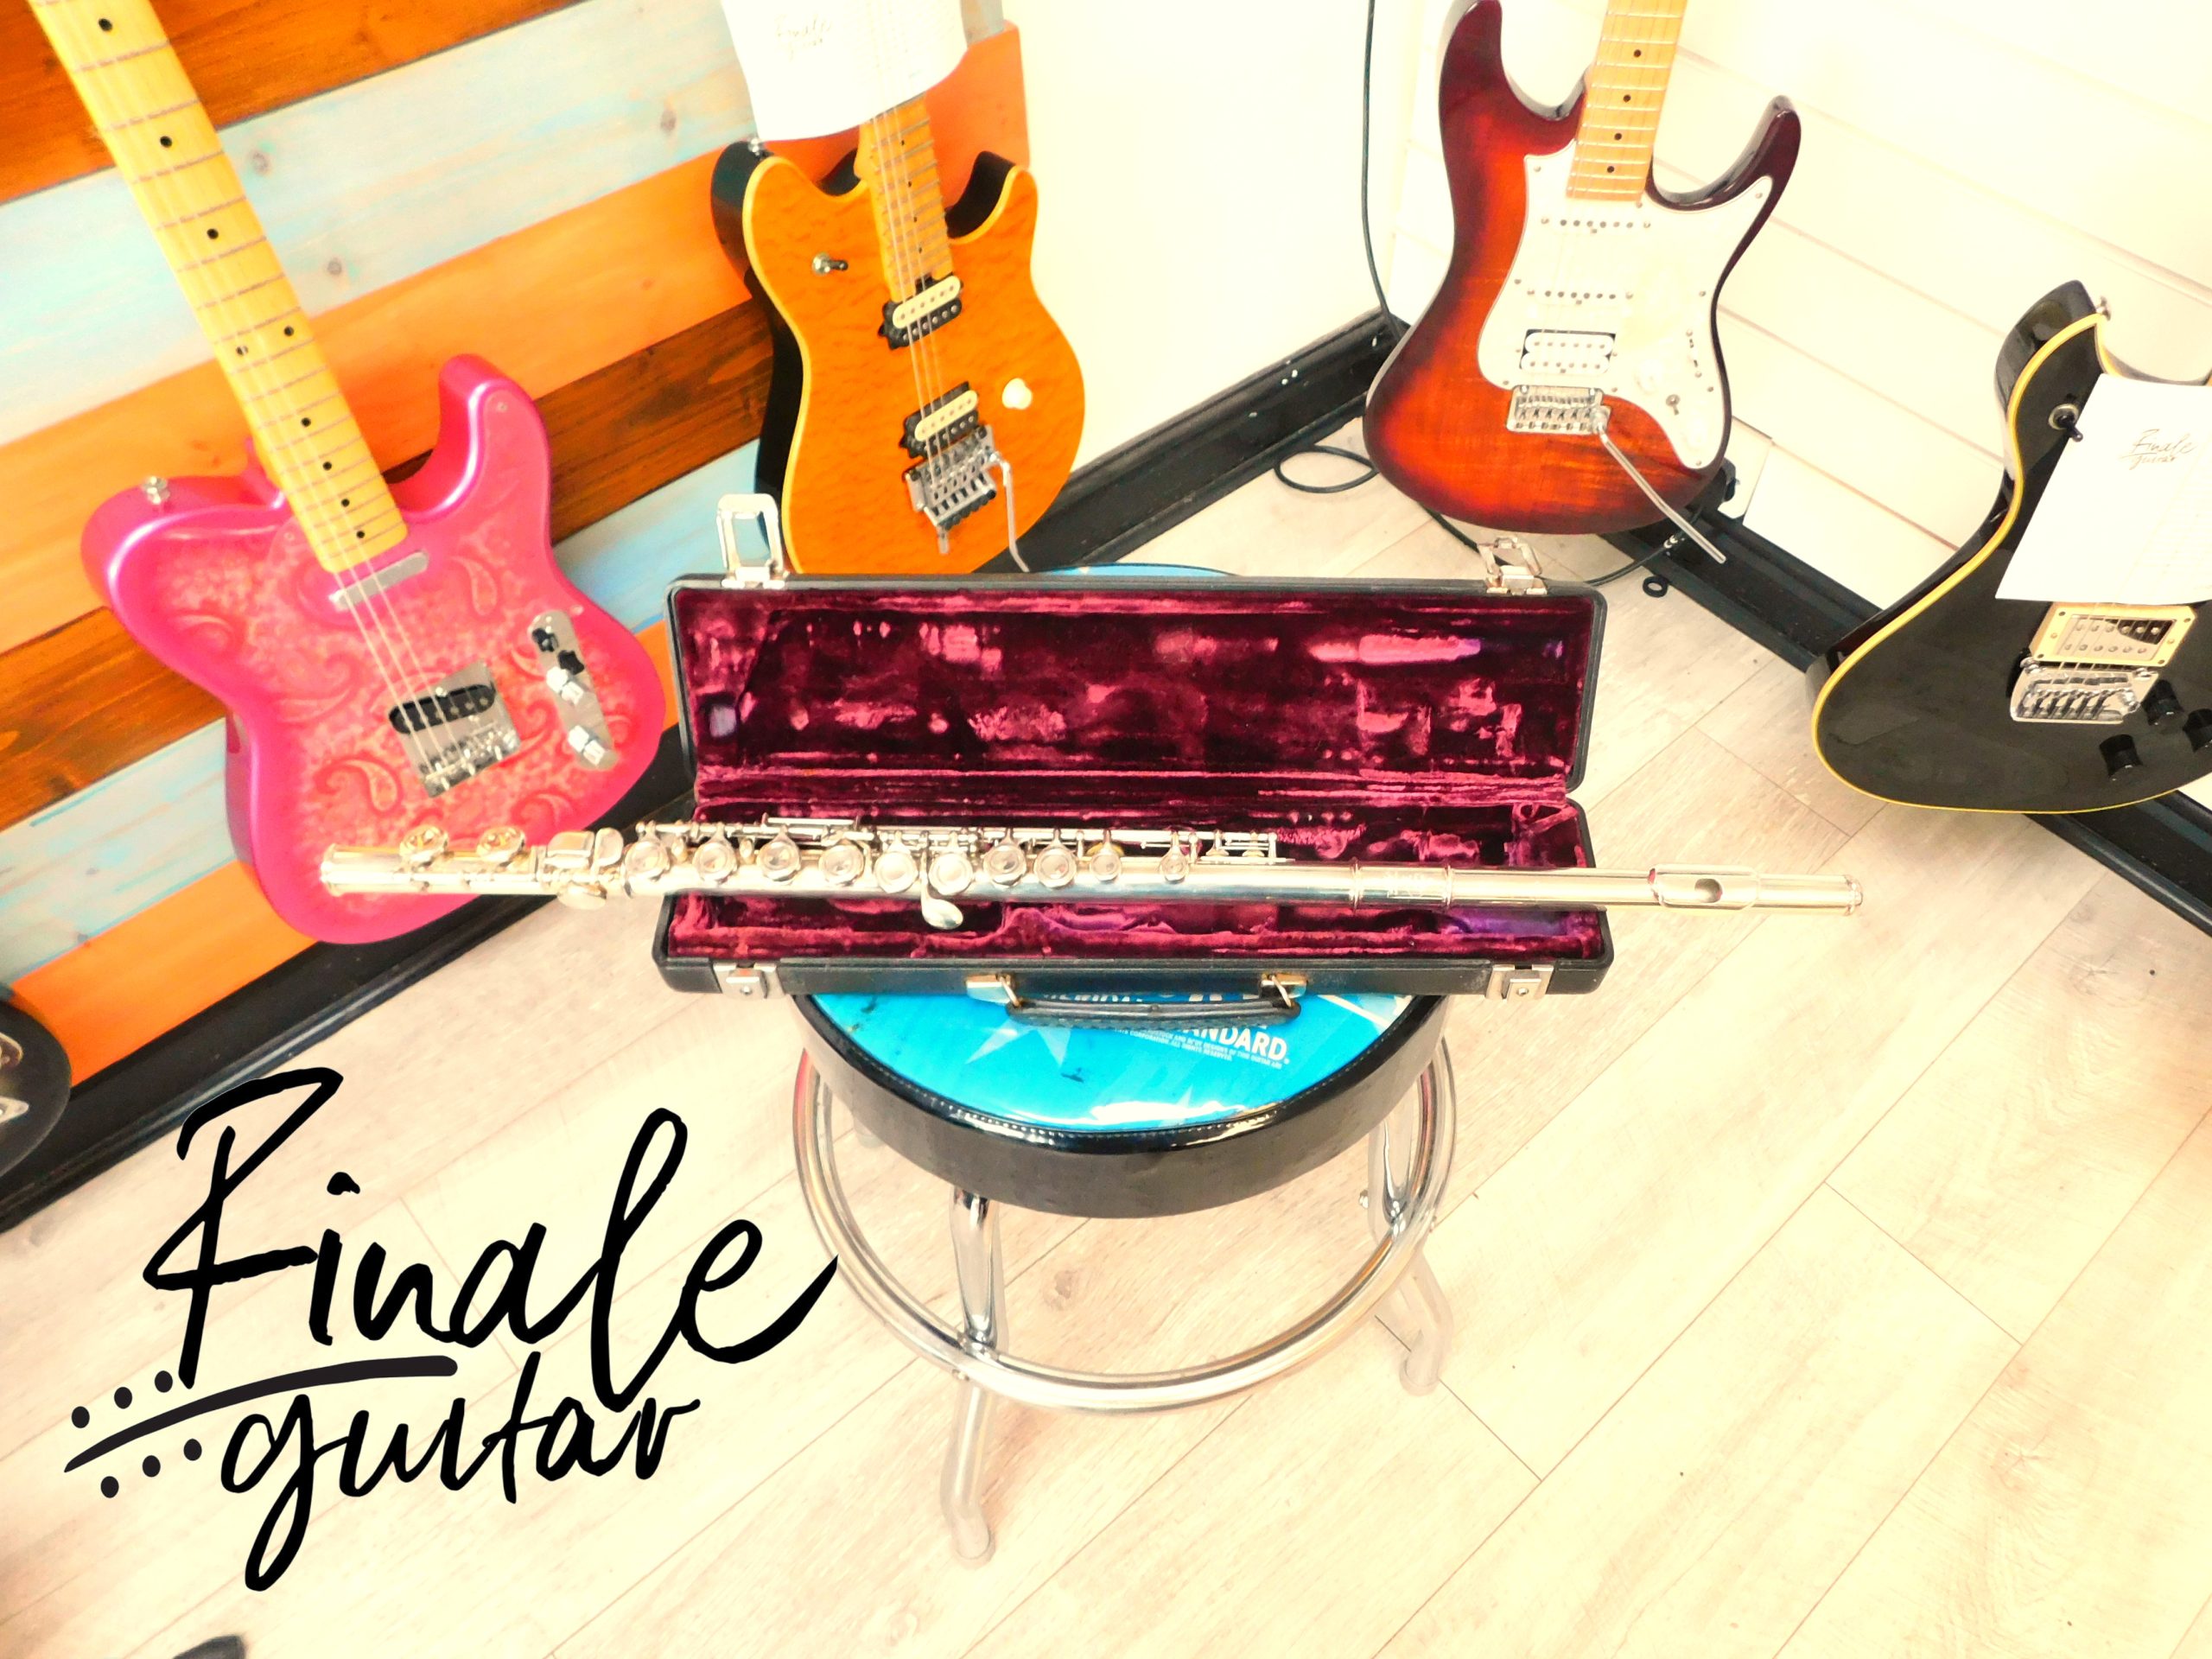 Flute Buffet Crampon (Paris) Cooper Scale ARL E with case for sale in our Sheffield Guitar shop, Finale Guitar